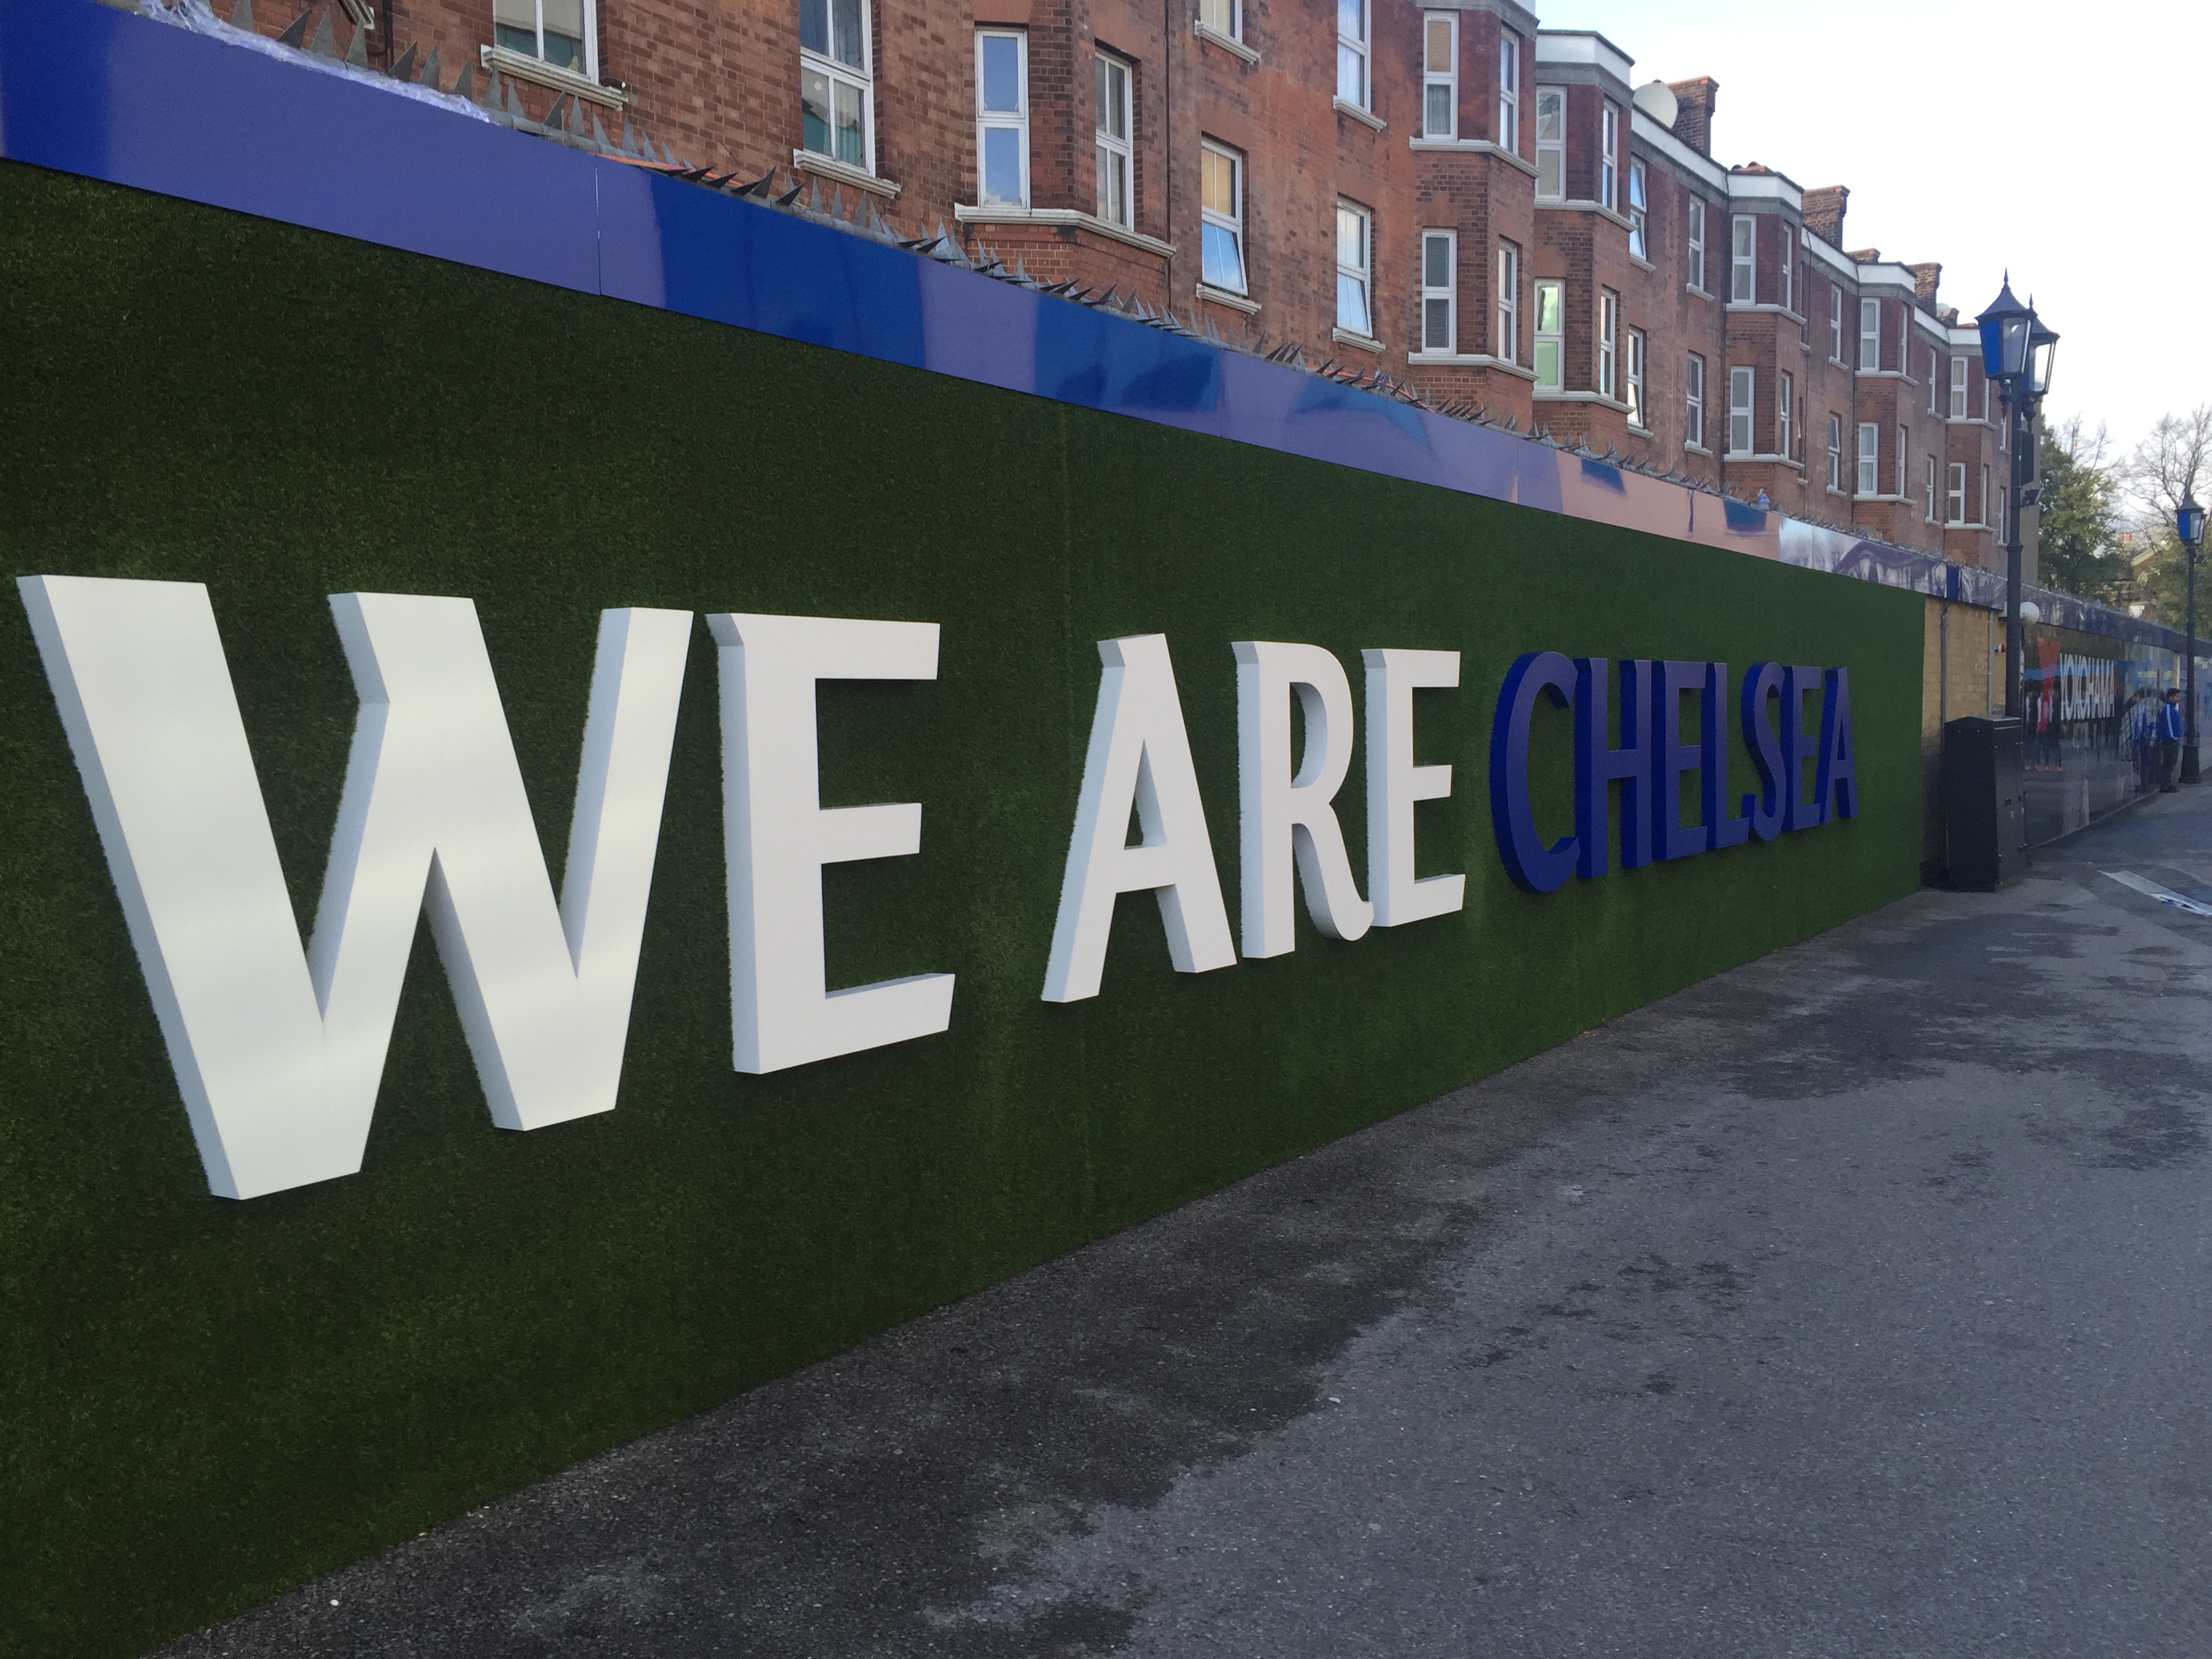 Chelsea FC Stamford Bridge